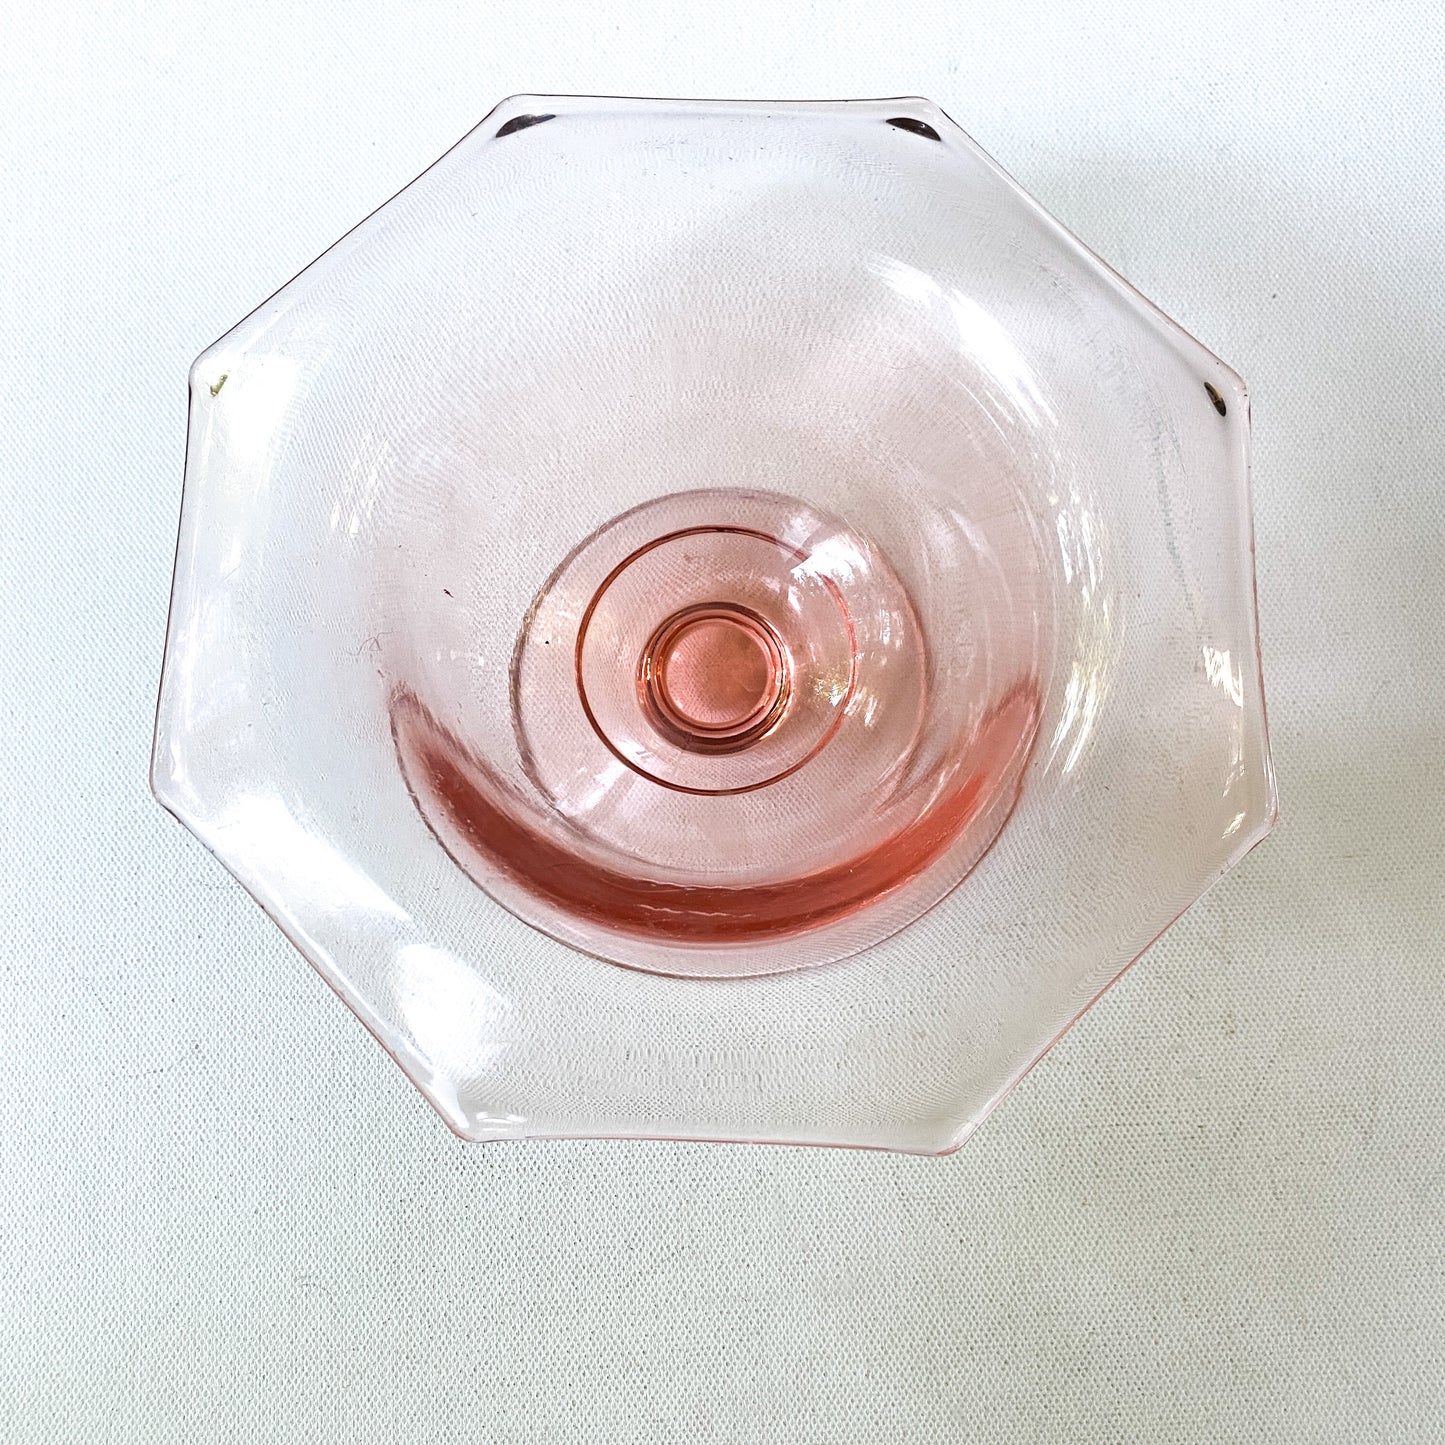 Vintage Pink Depression Glass Footed Compote Bowl, Pink Pedestal Candy Dish